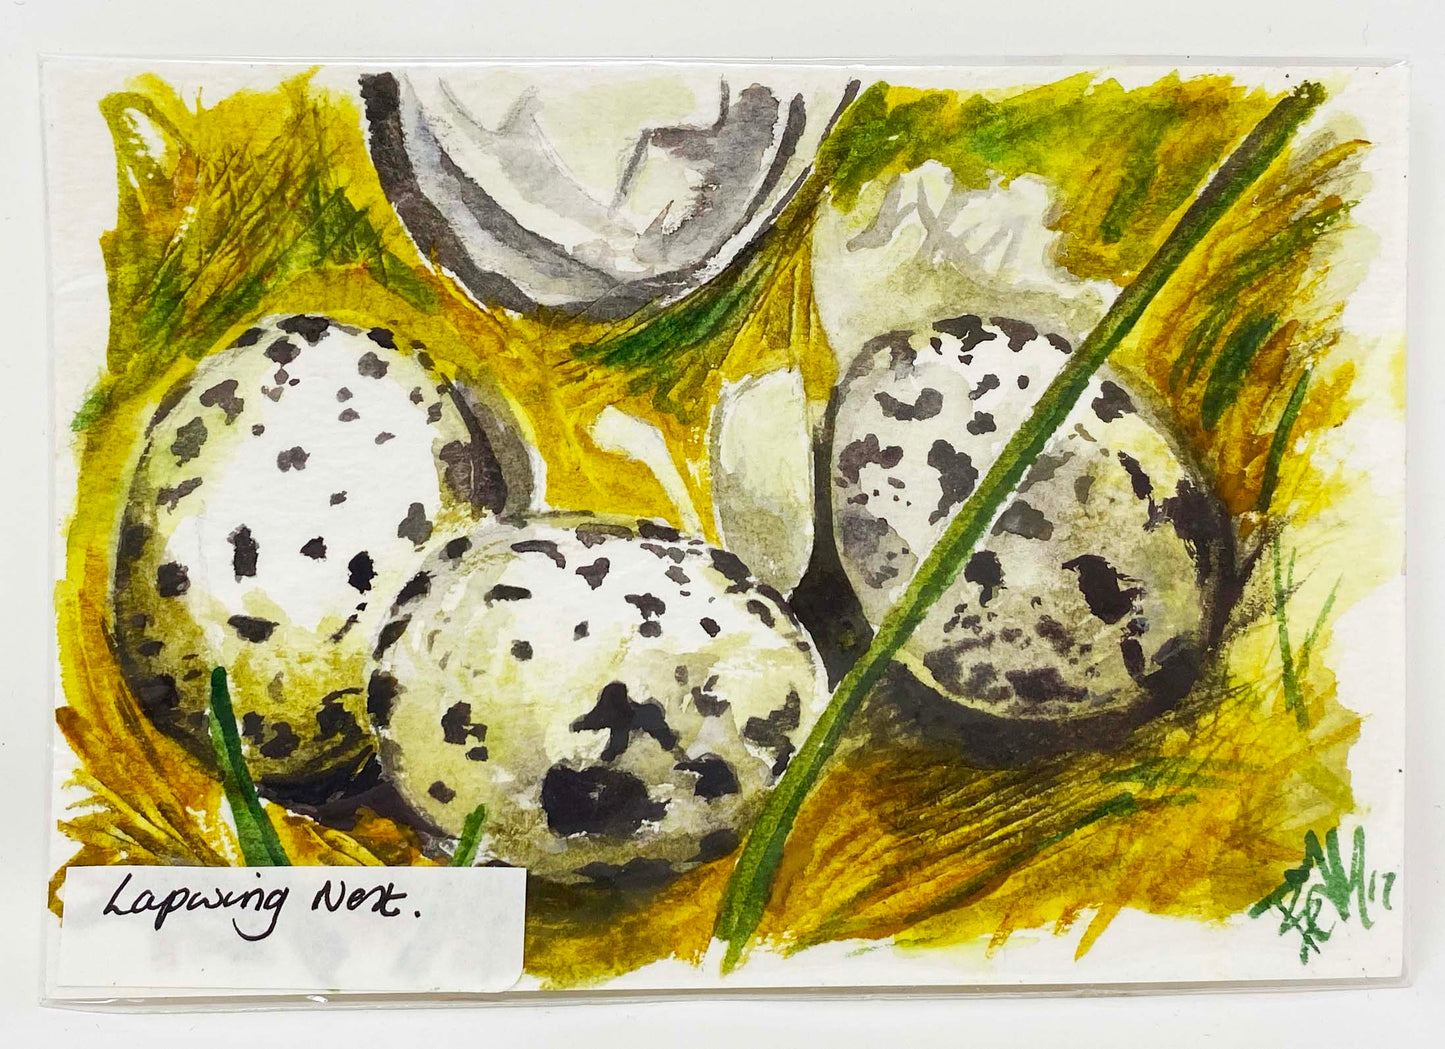 Lapwing Nest Watercolour by Burgette Matthews